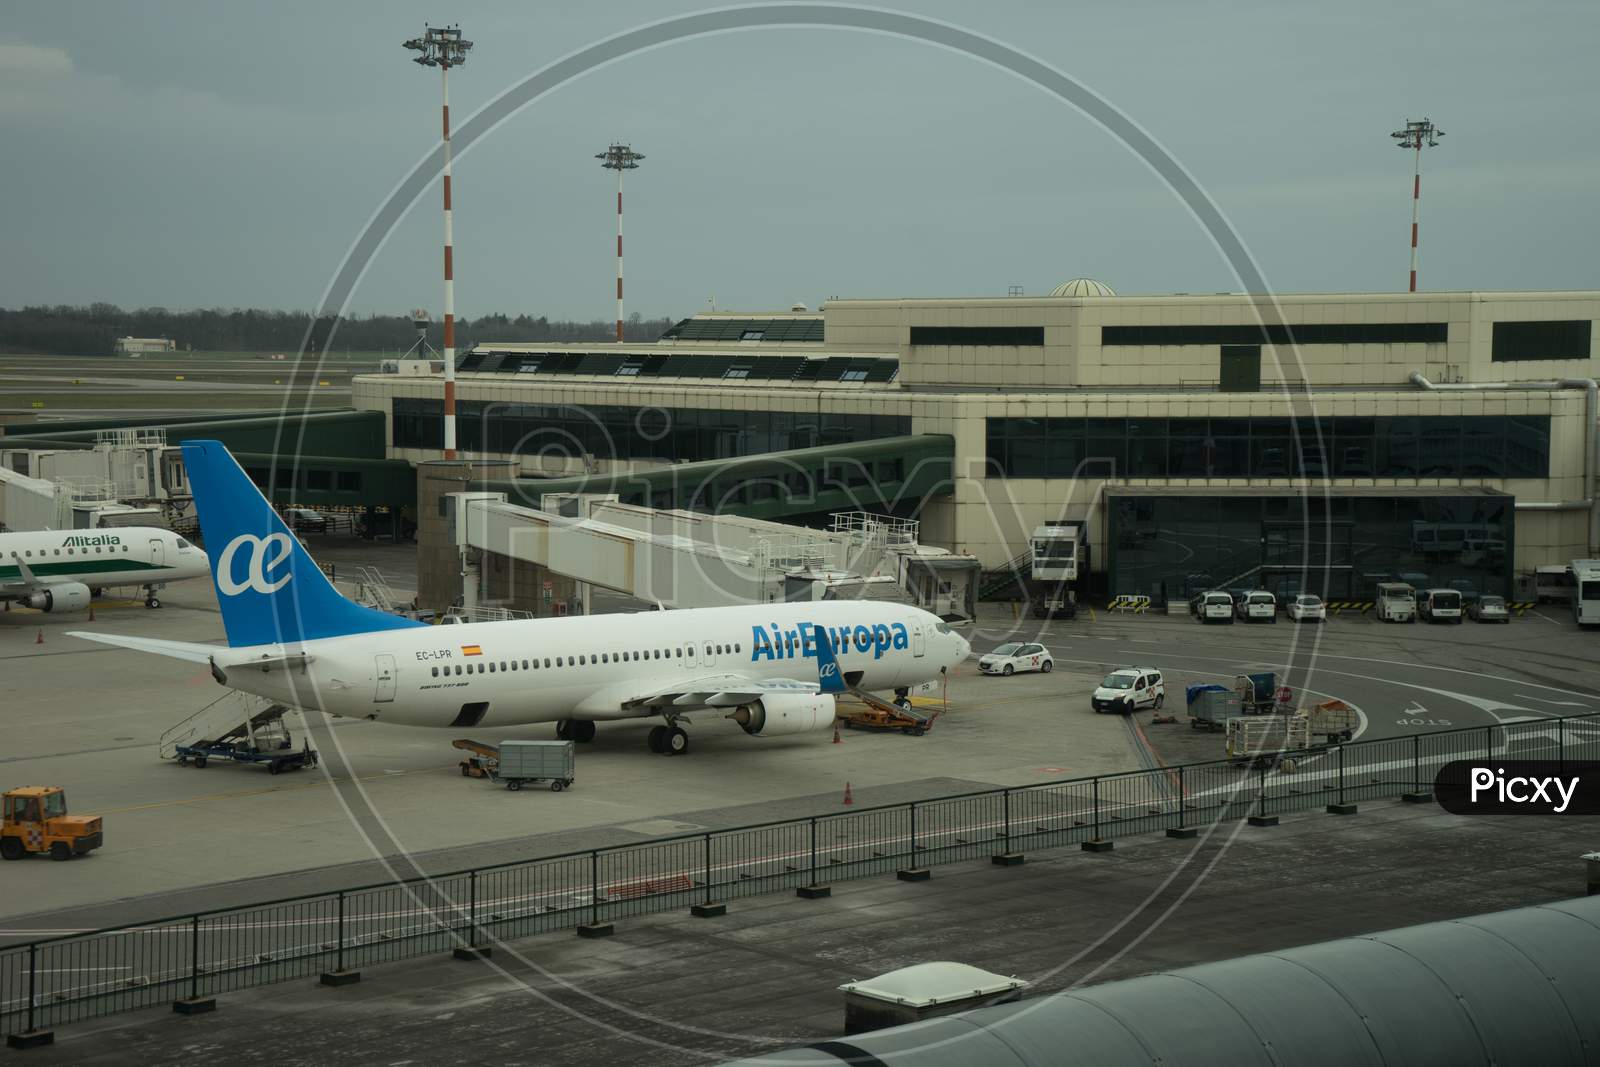 Milan Airport, Italy-April 2, 2018: Air Europa Plane At The Milan Malpensa Airport